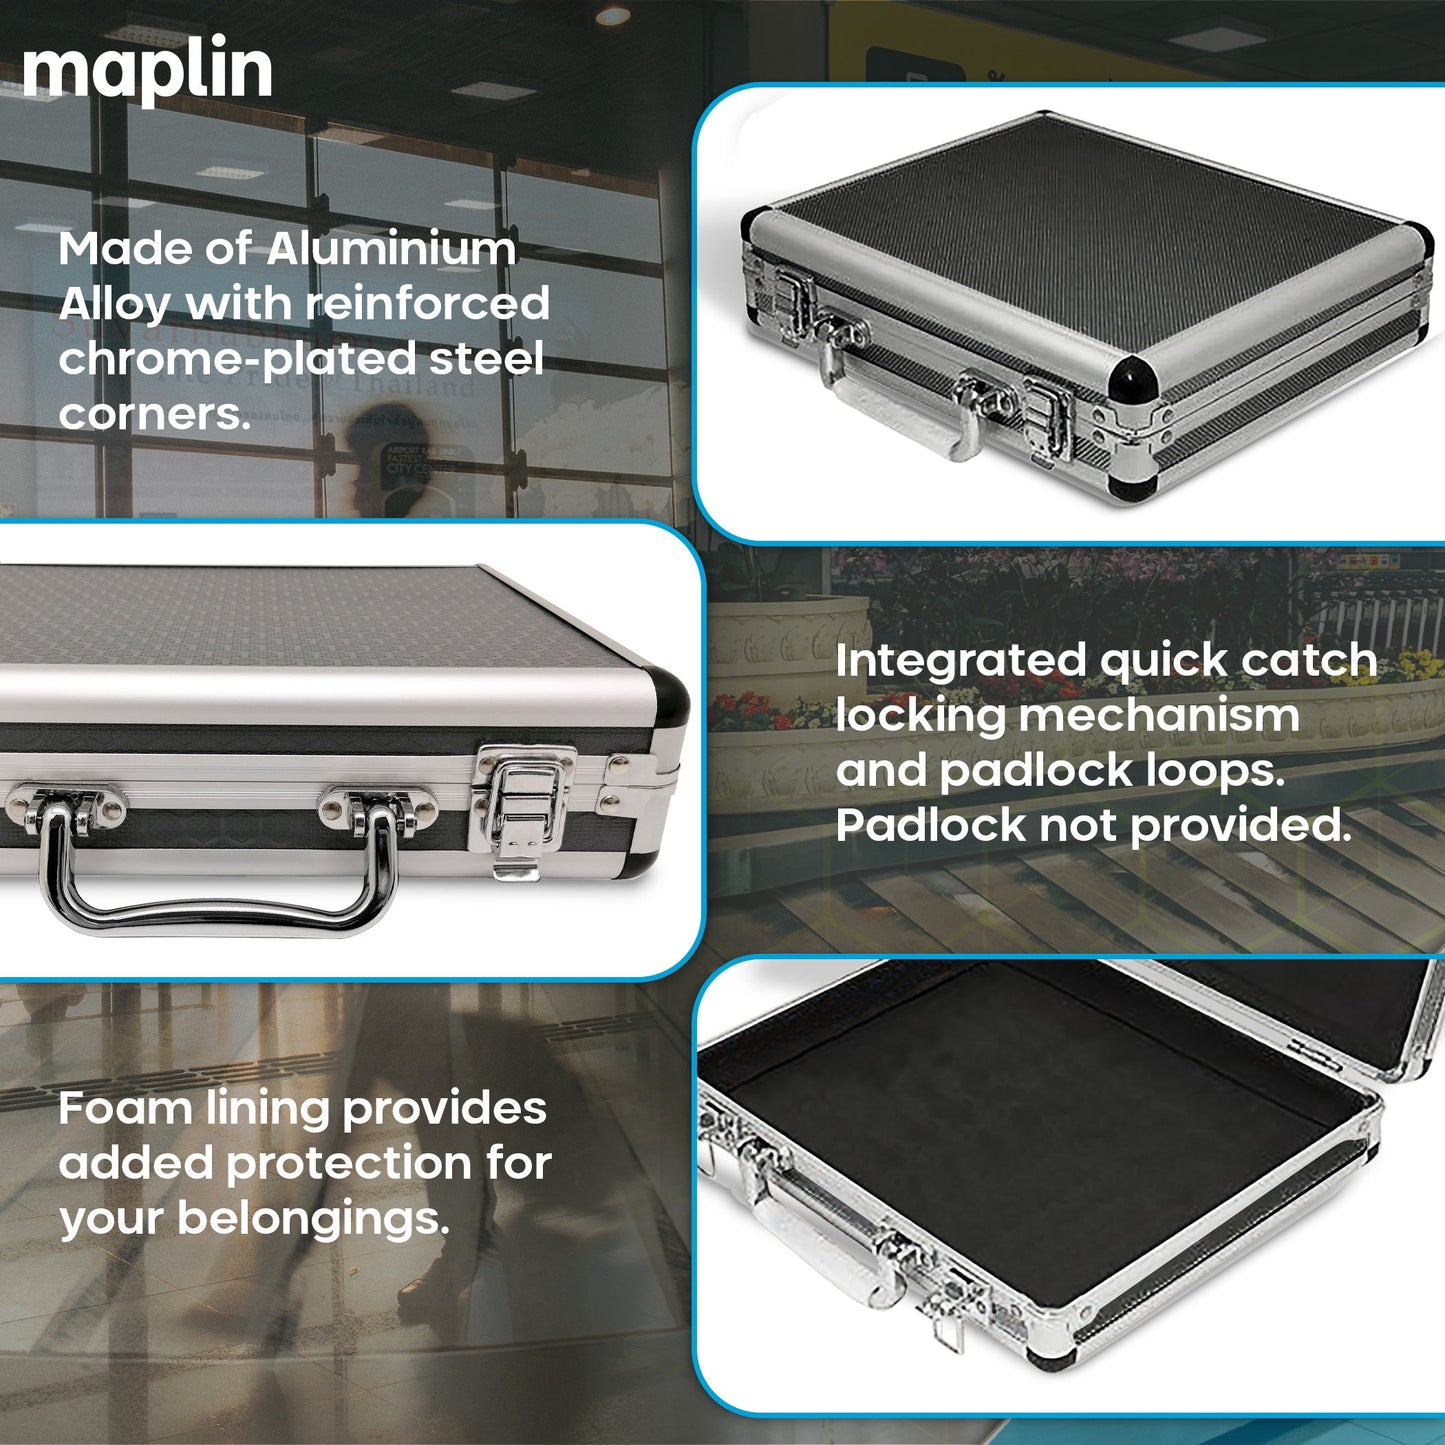 Maplin Plus Aluminium 65 x 280 x 225mm Flight Case - Grey - maplin.co.uk